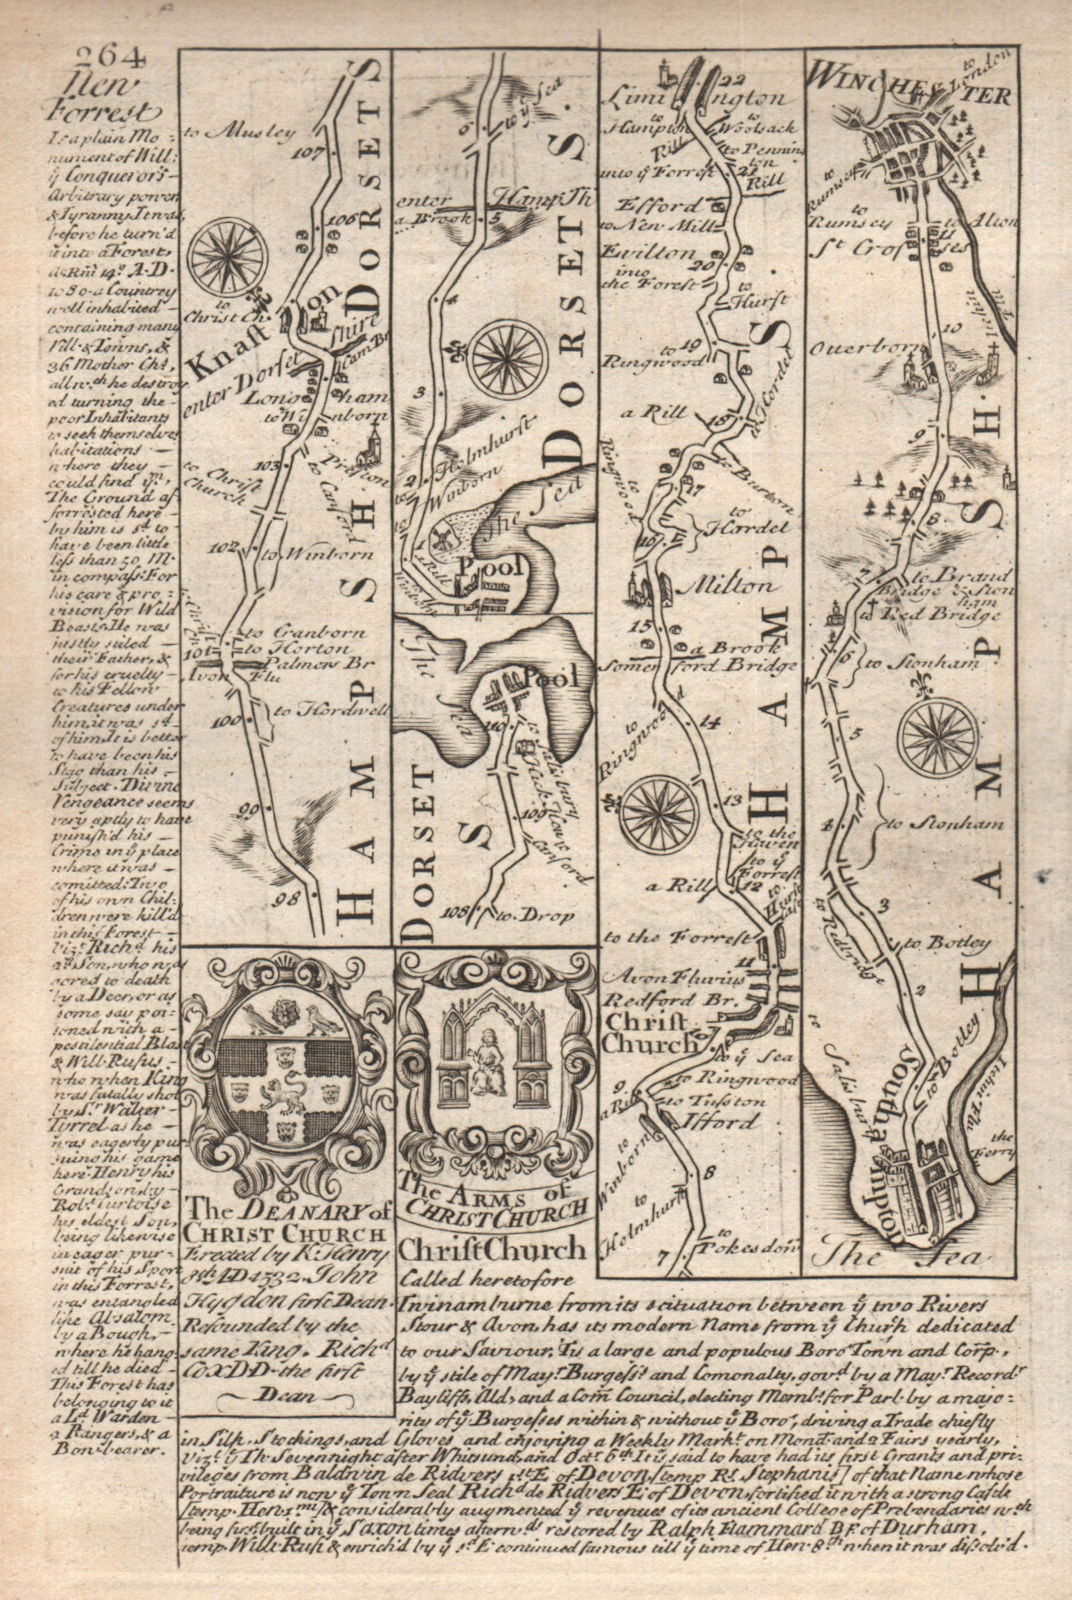 Poole-Christchurch-Lymington. Southampton-Winchester OWEN/BOWEN road map 1753